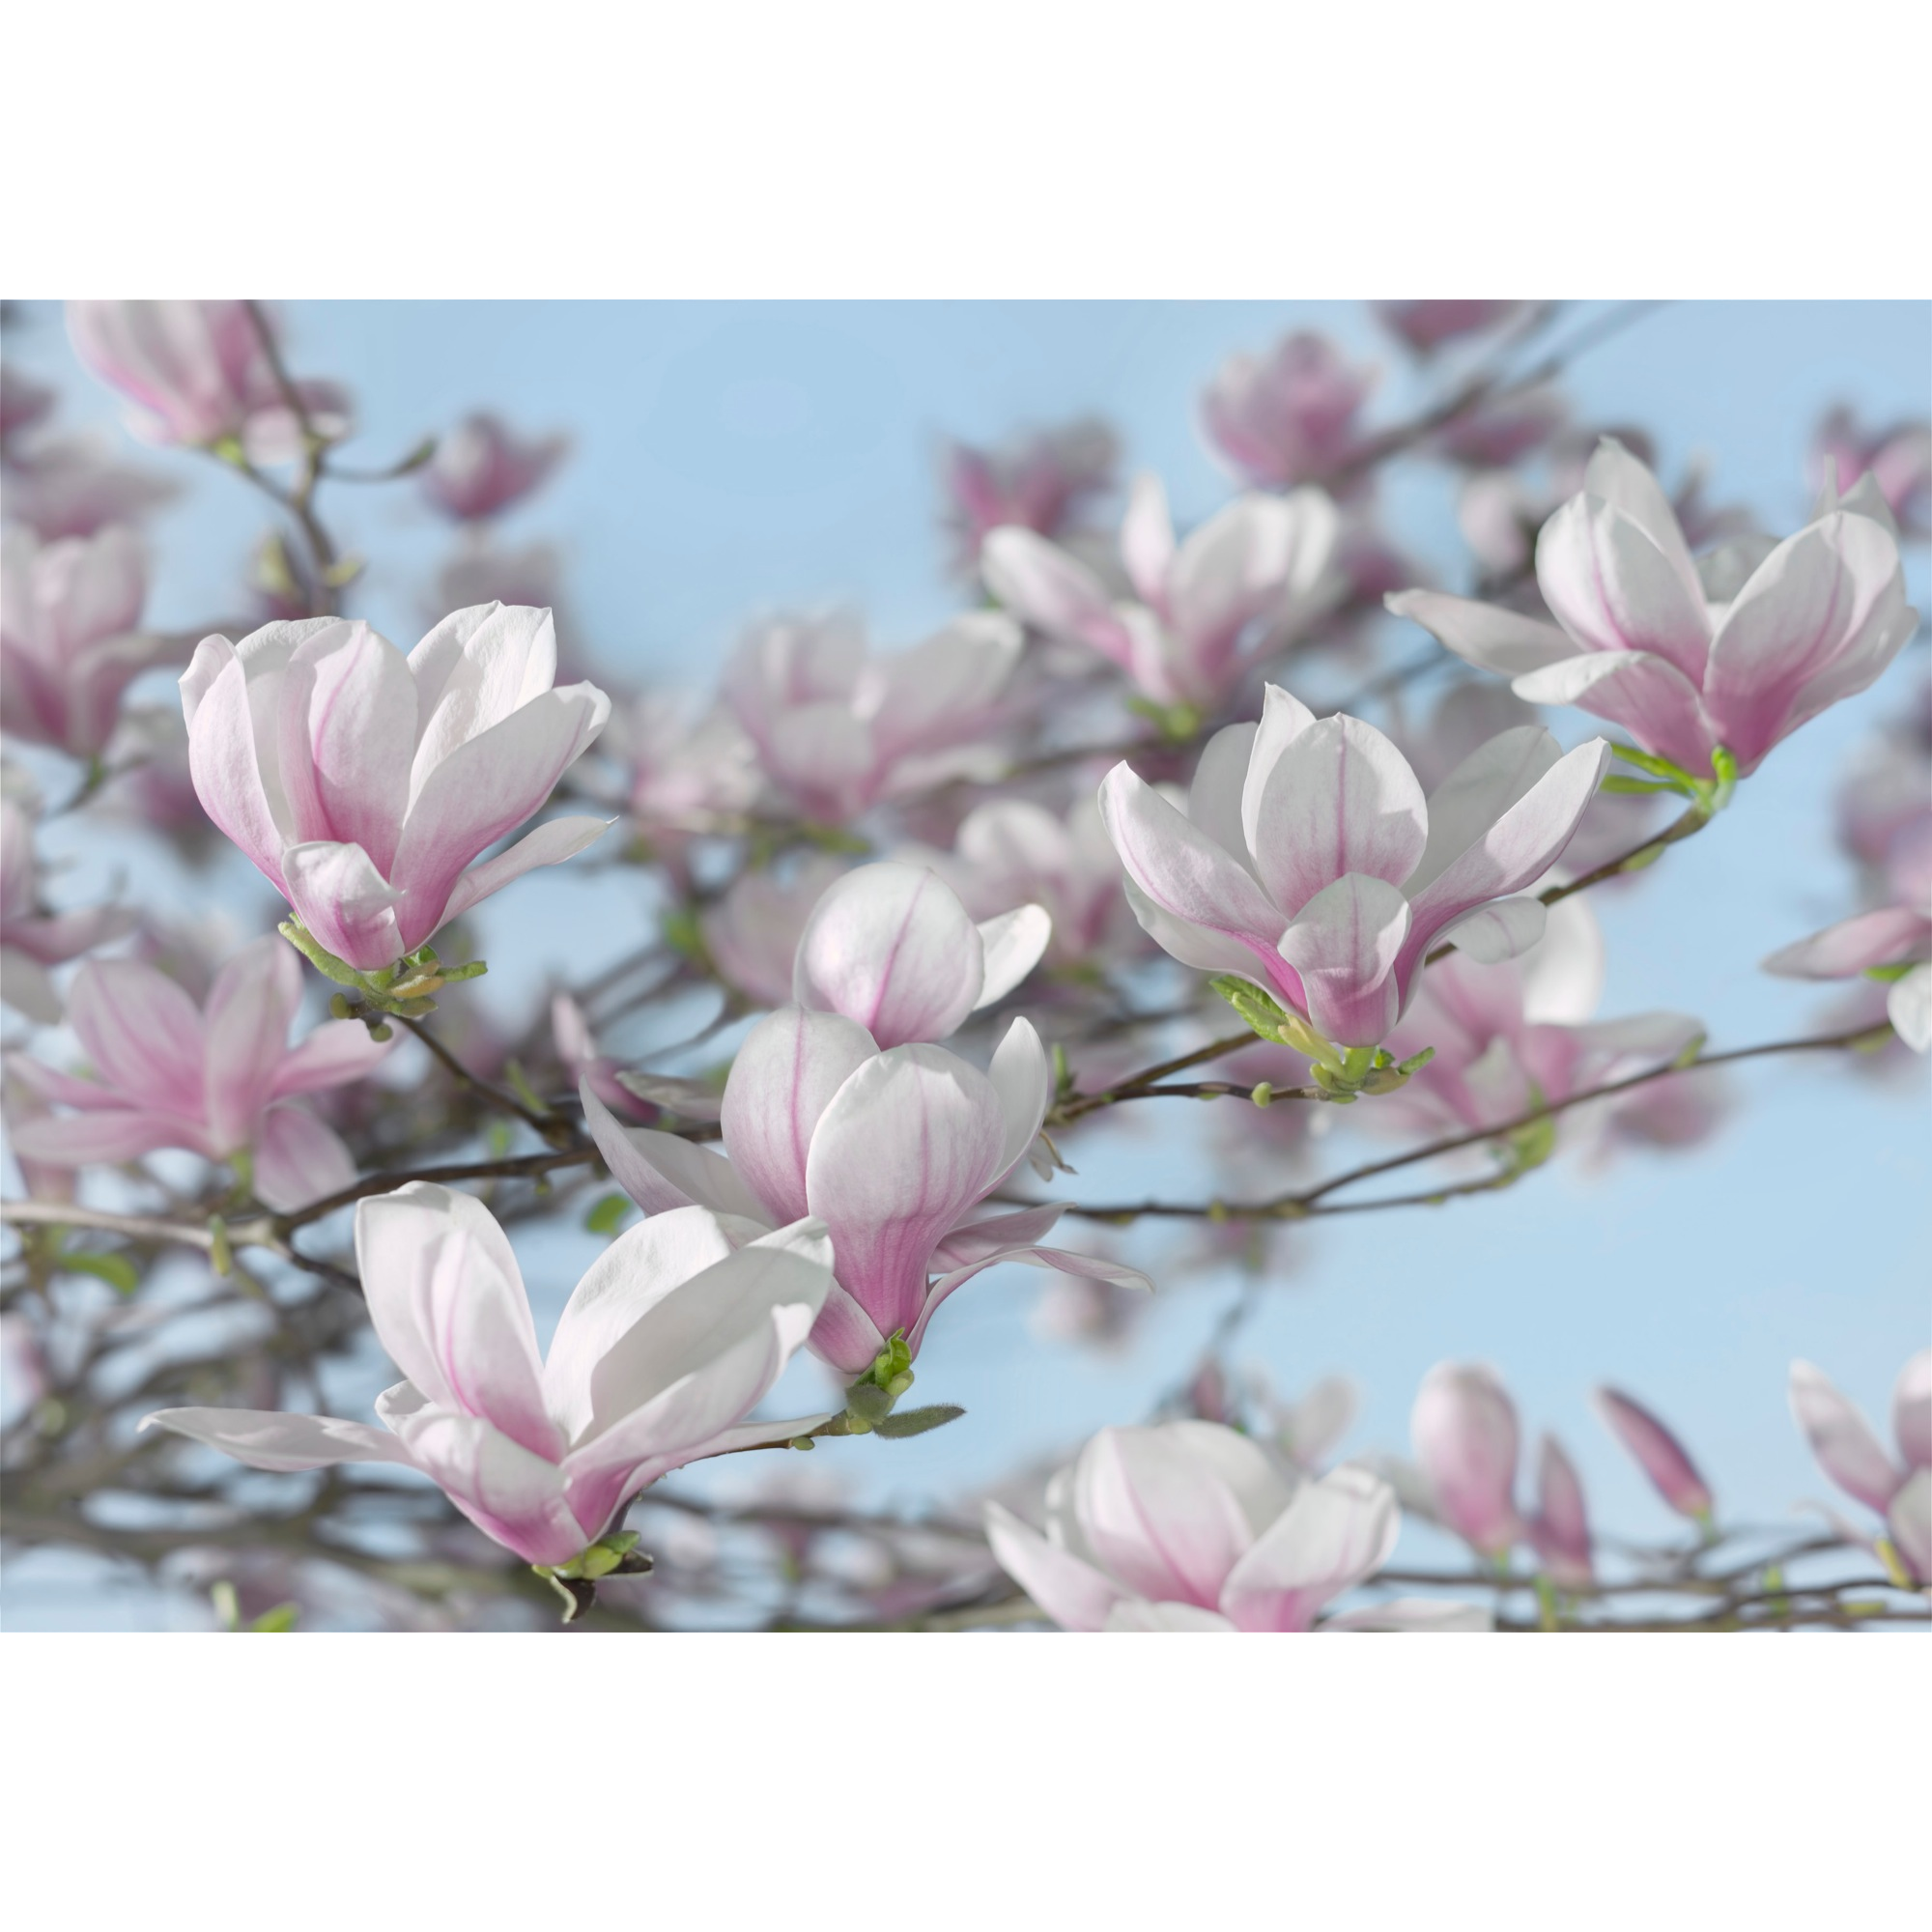 Fototapete 'Magnolia' 368 x 254 cm + product picture